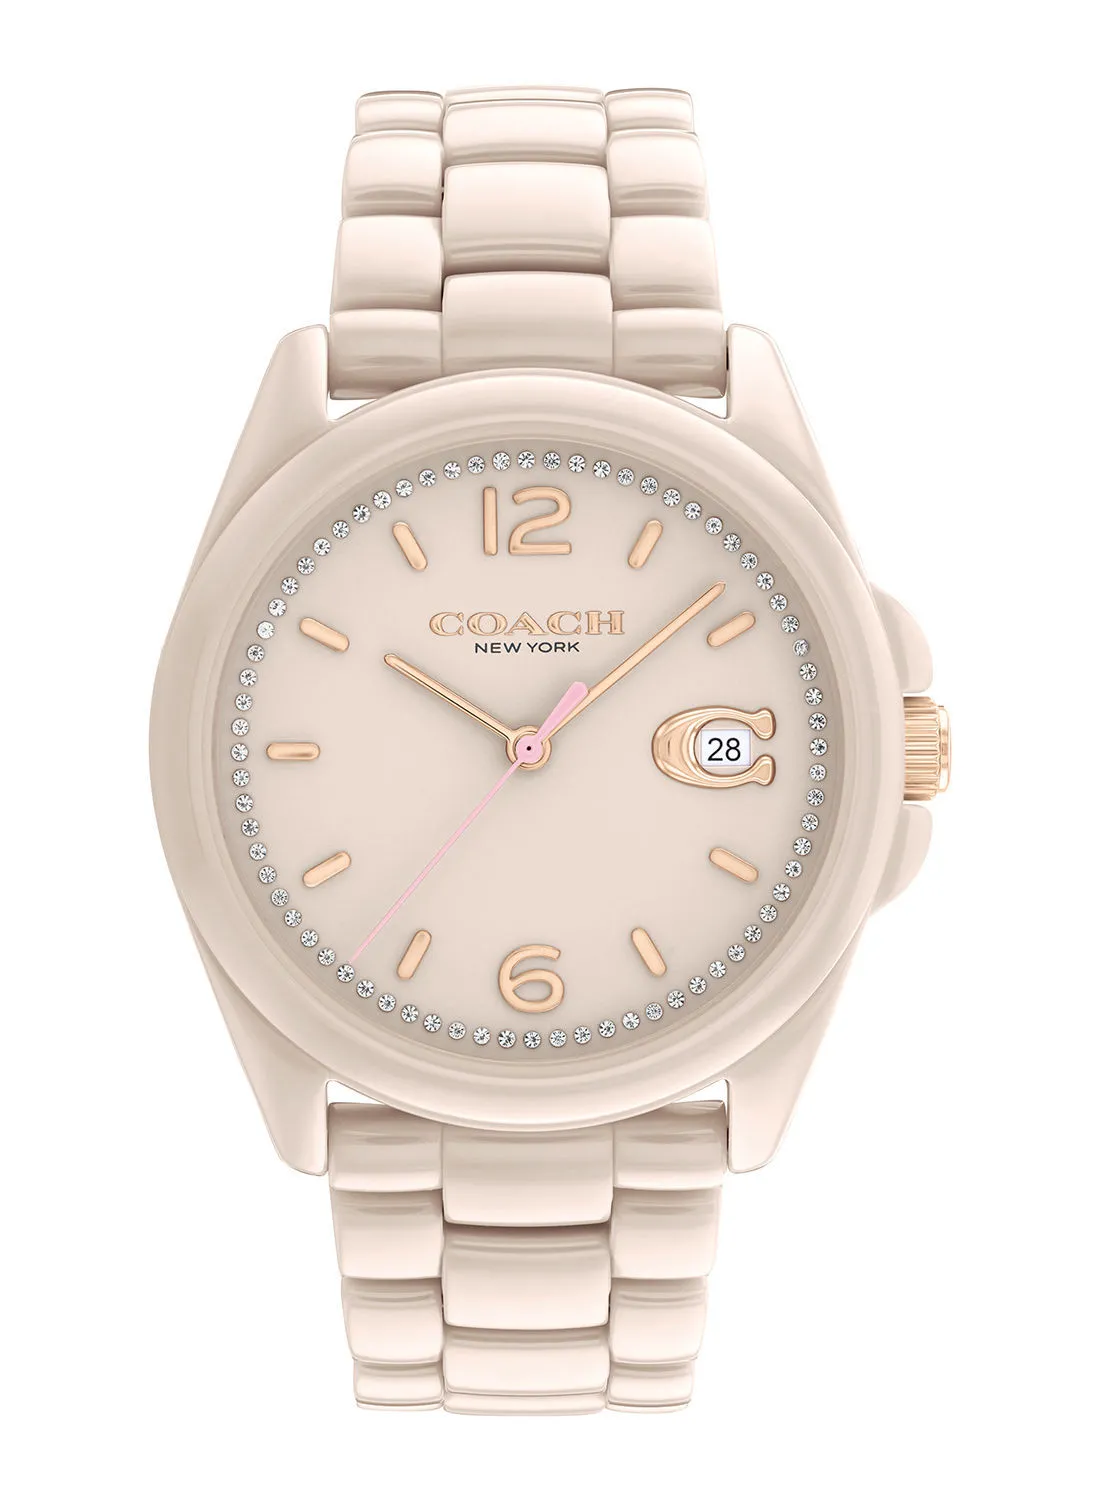 COACH Women's Analog Round Leather Wrist Watch 14504065 - 36 mm